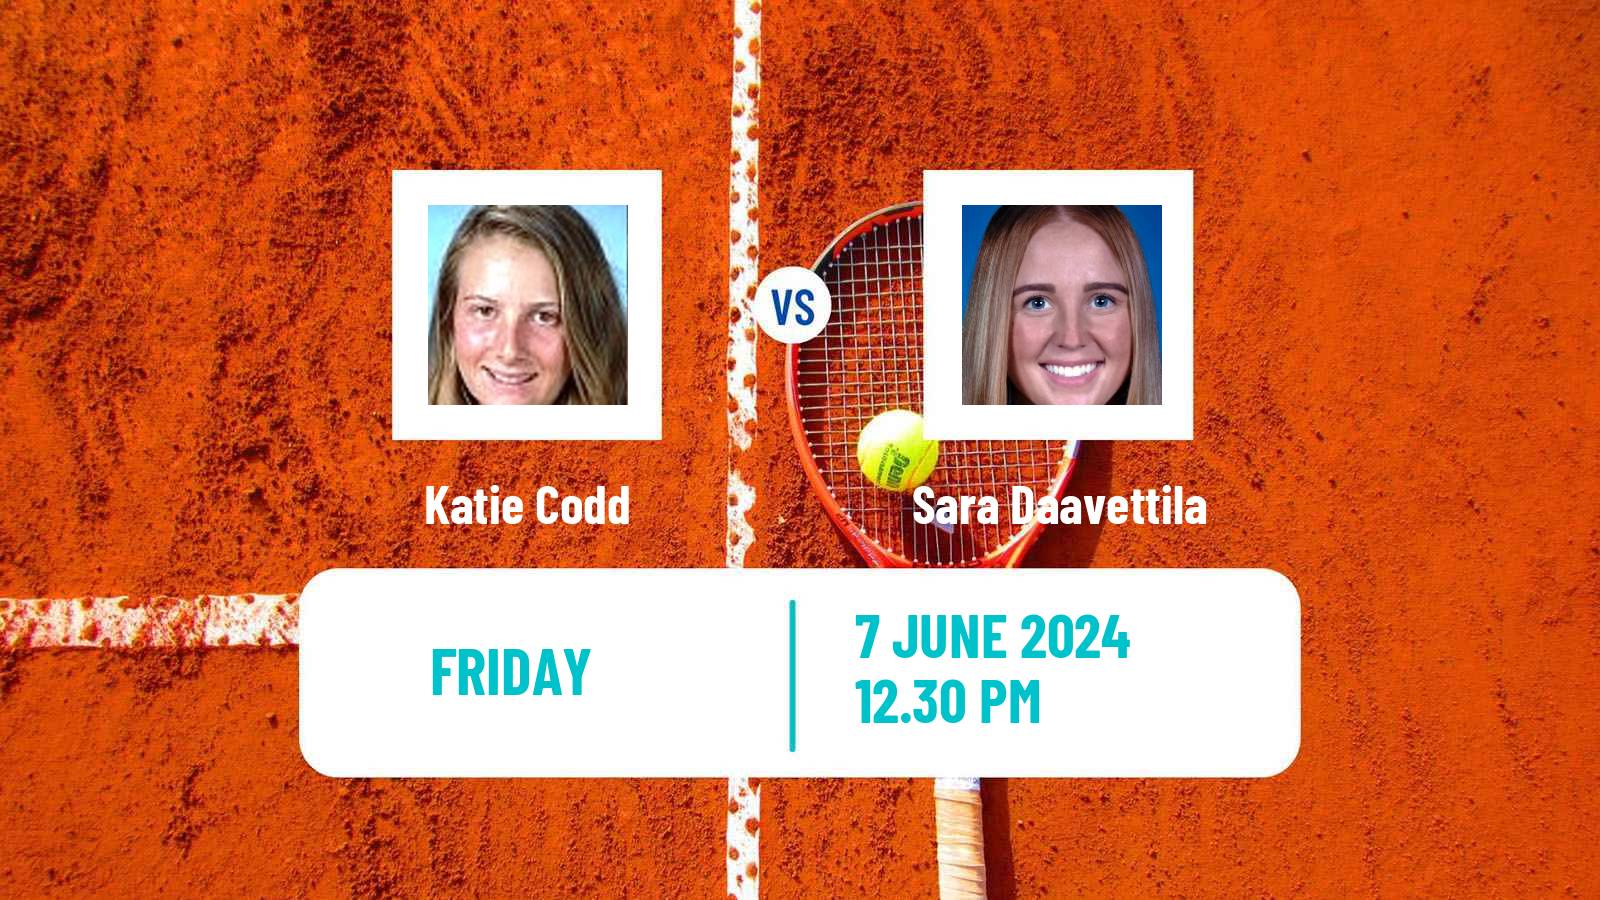 Tennis ITF W15 San Diego Ca 2 Women Katie Codd - Sara Daavettila